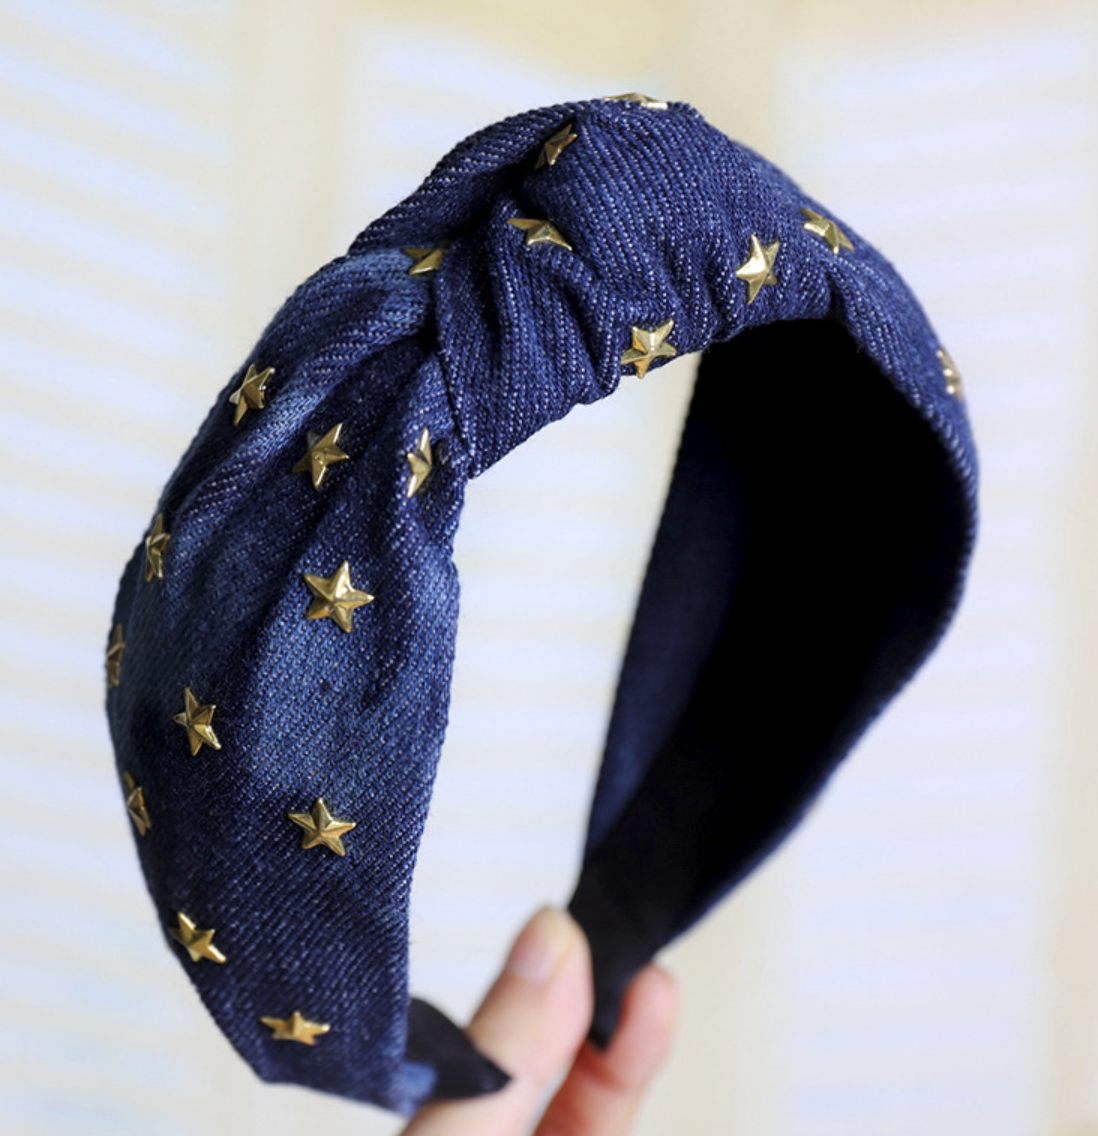 Denim Star Headband